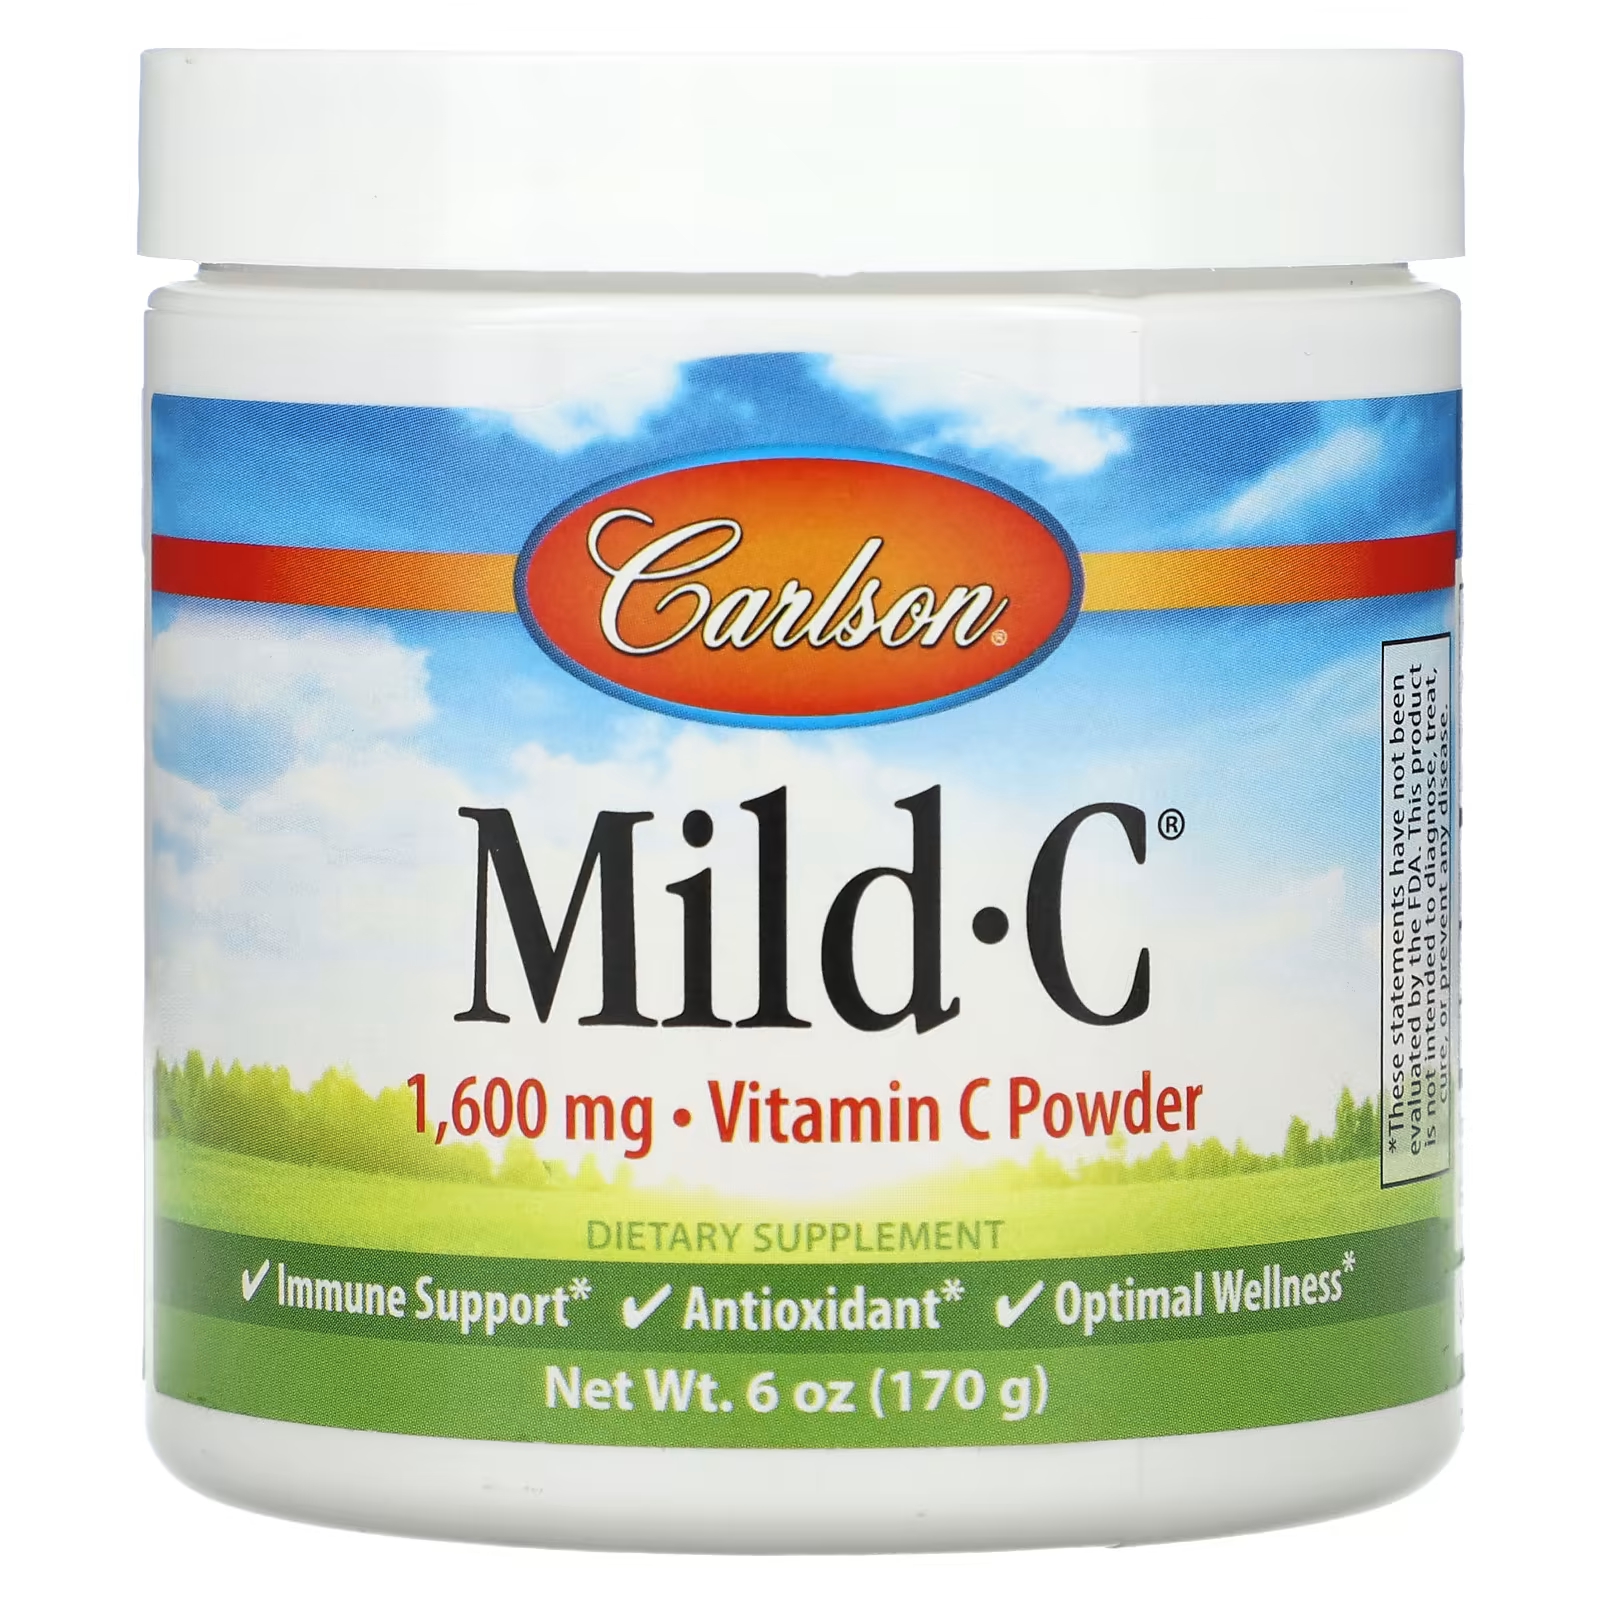 Порошок витамина С Carlson Mild-C 1600 мг, 170 г carlson кристаллы витамина c 2000 мг 170 г 6 унций